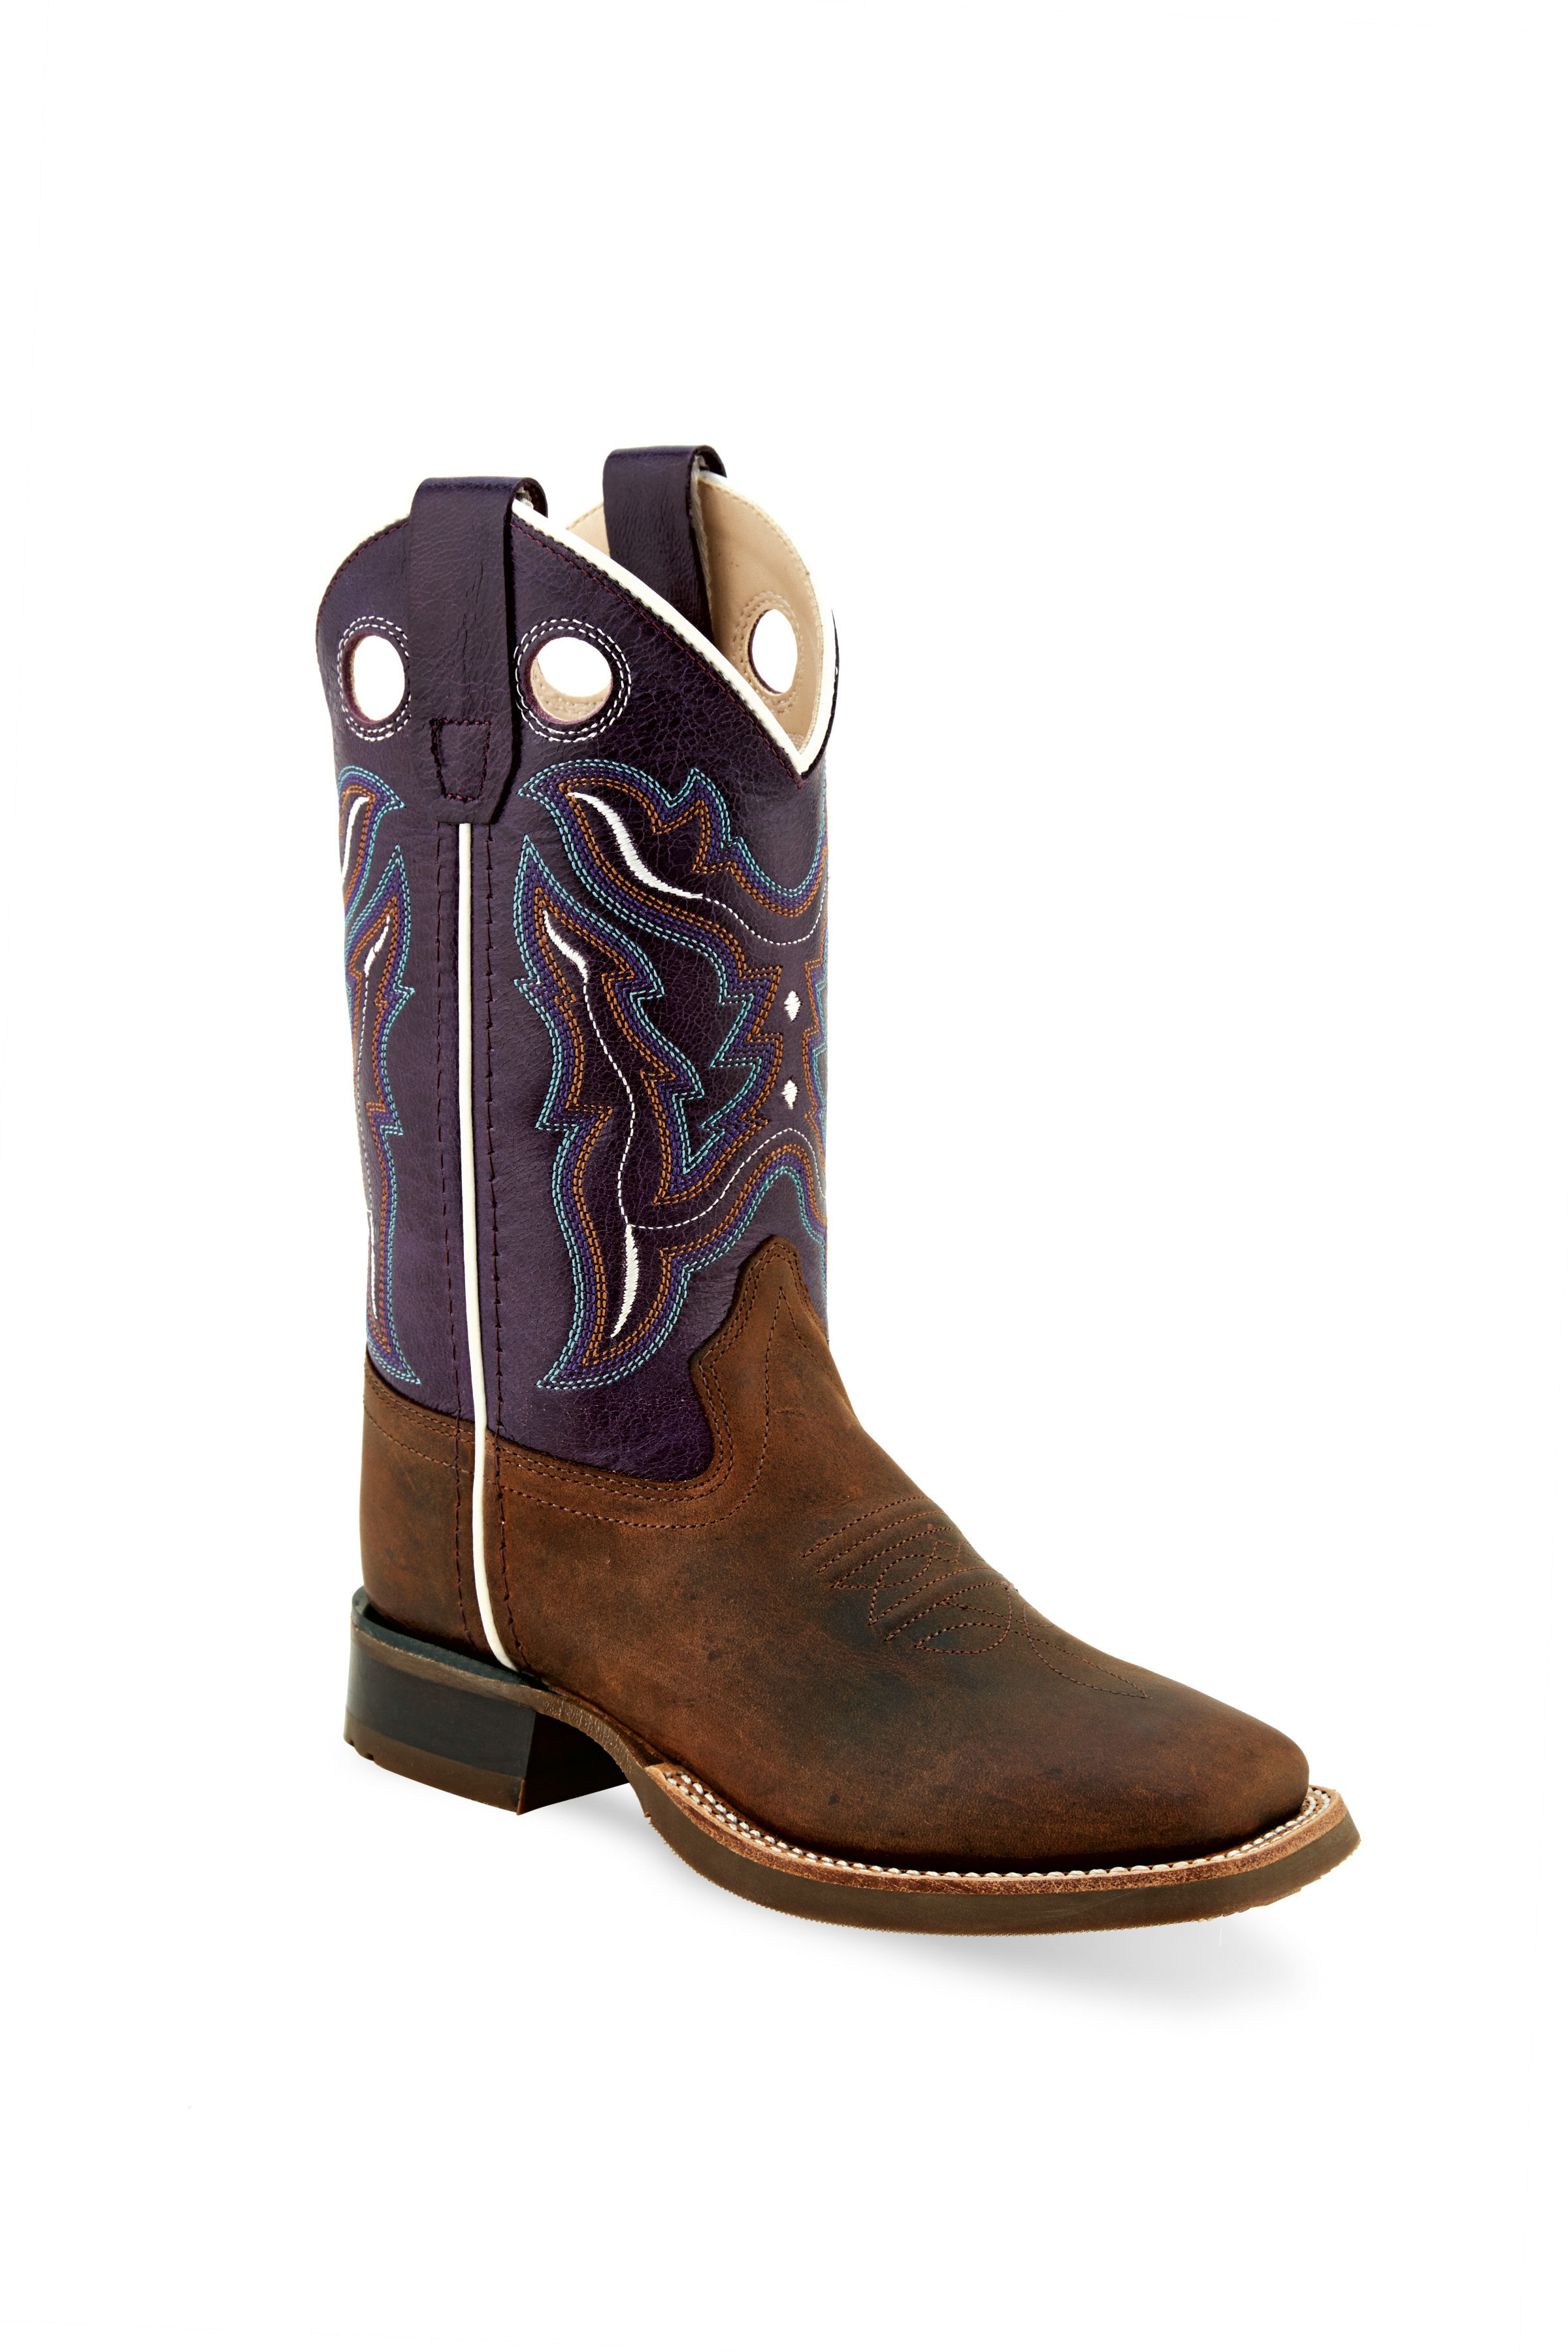 Cowboy boots for children BSC1805, purple-brown